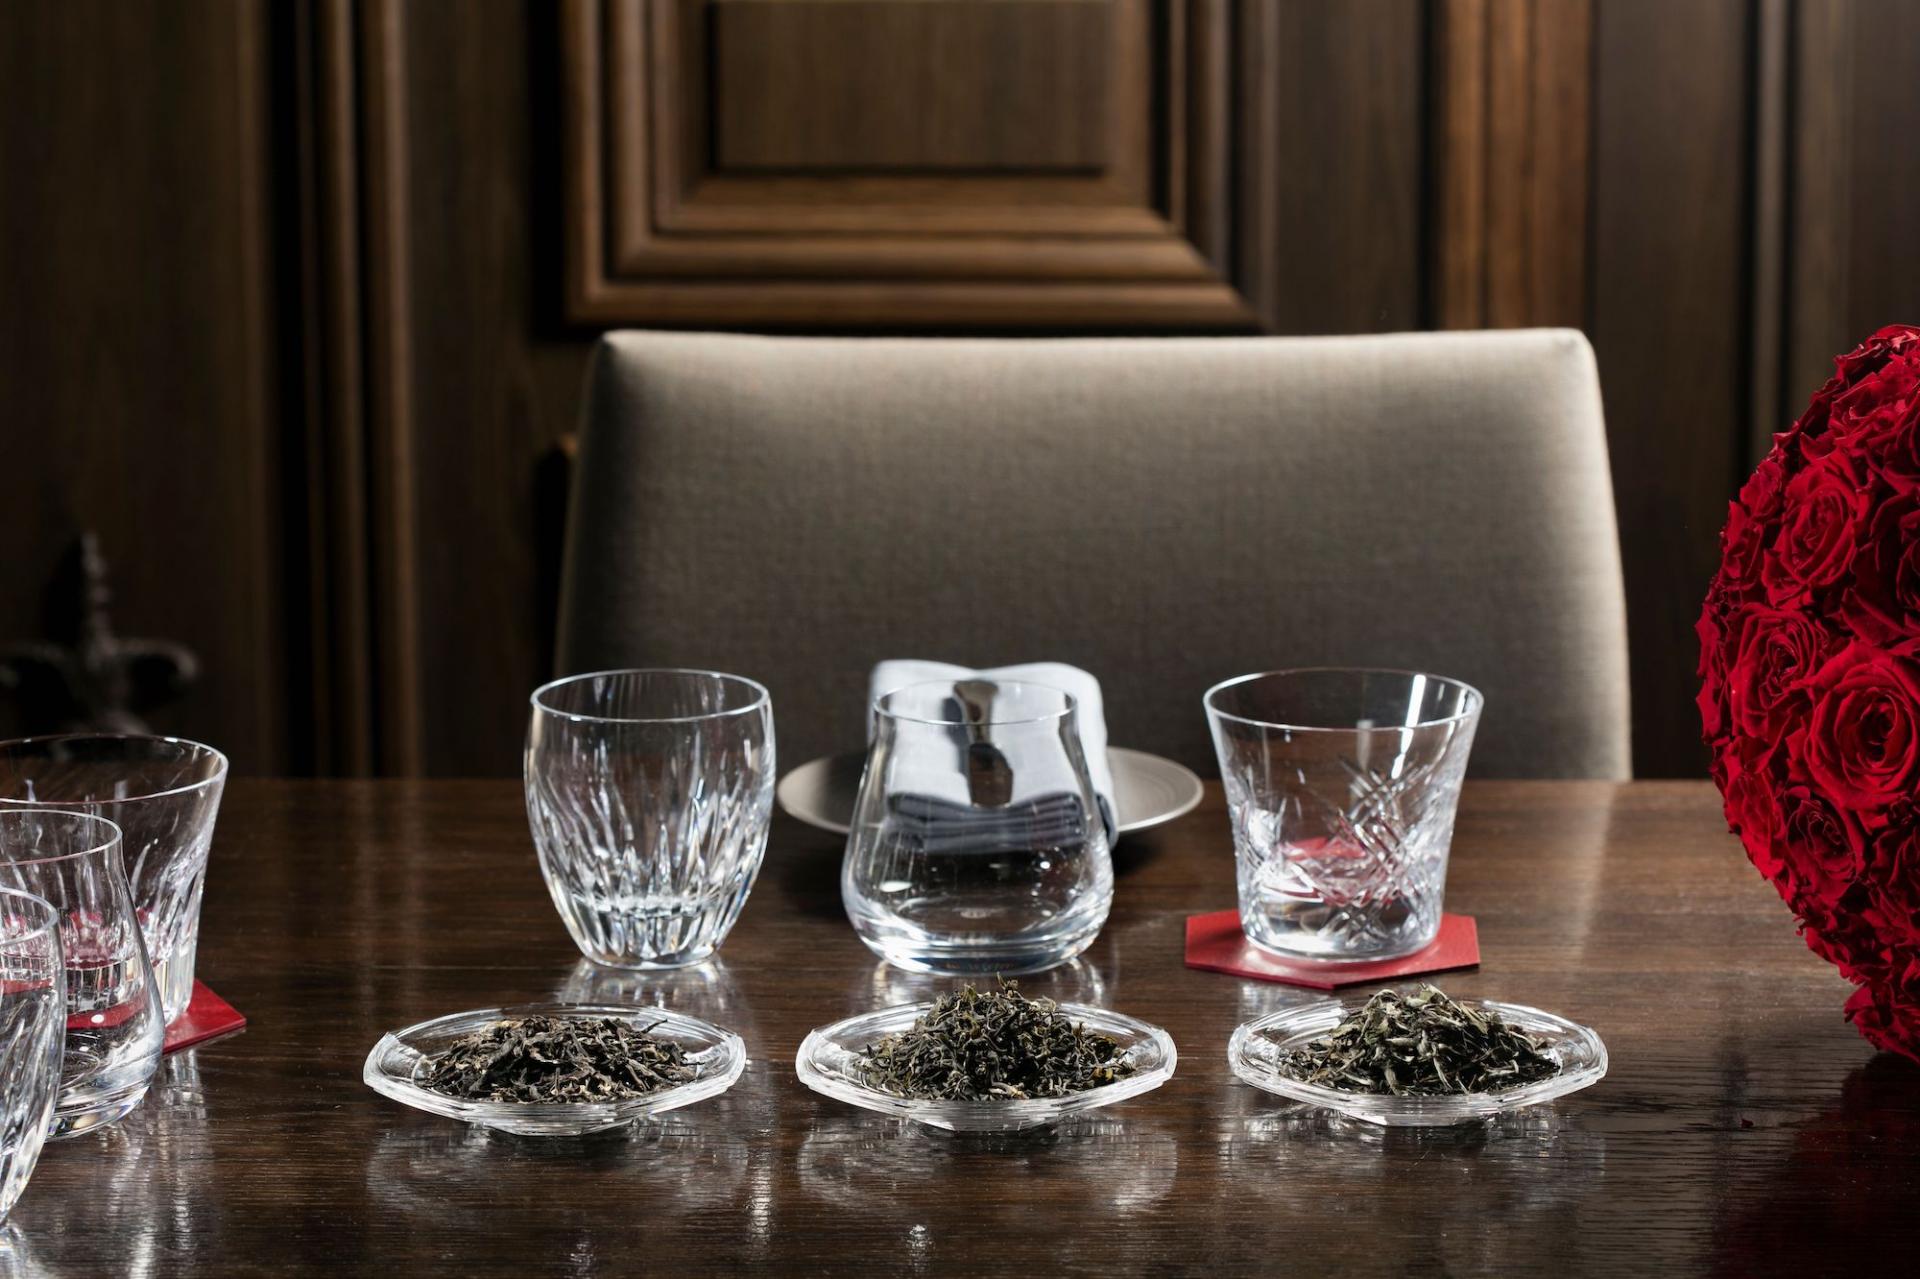 Tea tasting crystal glassware at Baccarat hotel